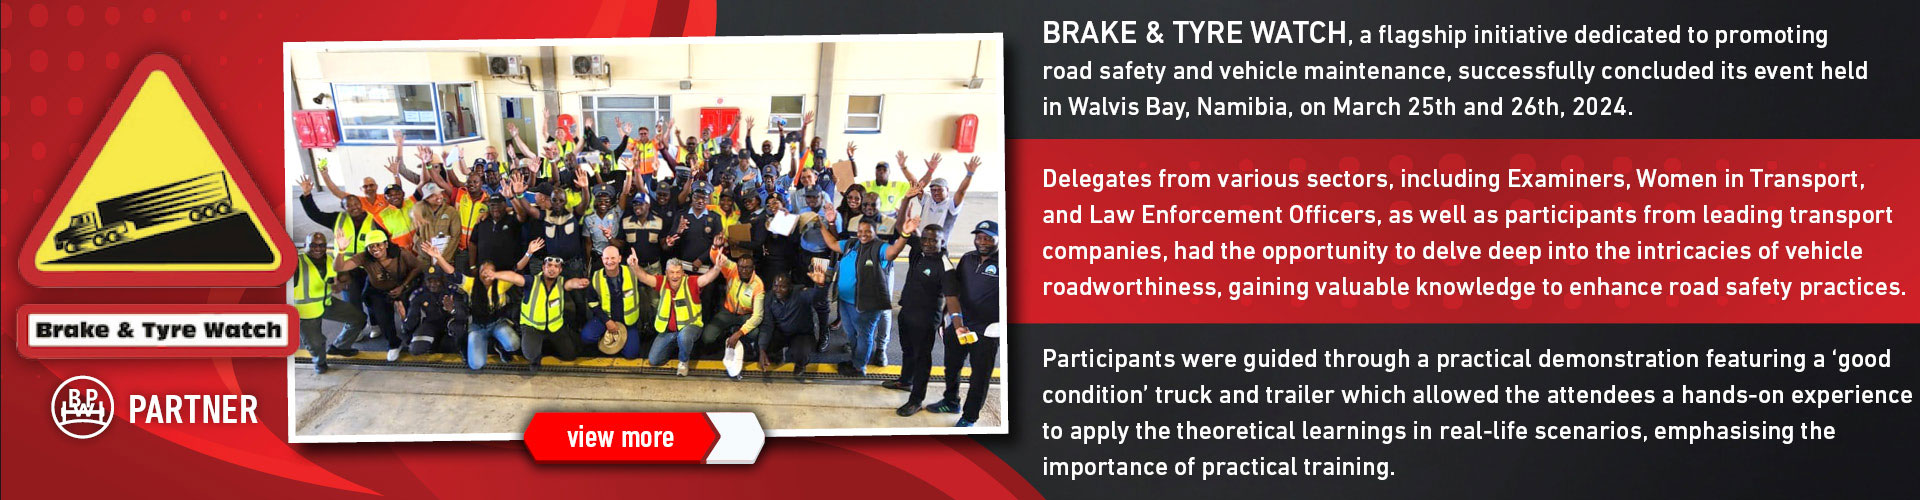 bpw-brake-tyre-watch BPW - we think transport | Home | BPW - we think transport